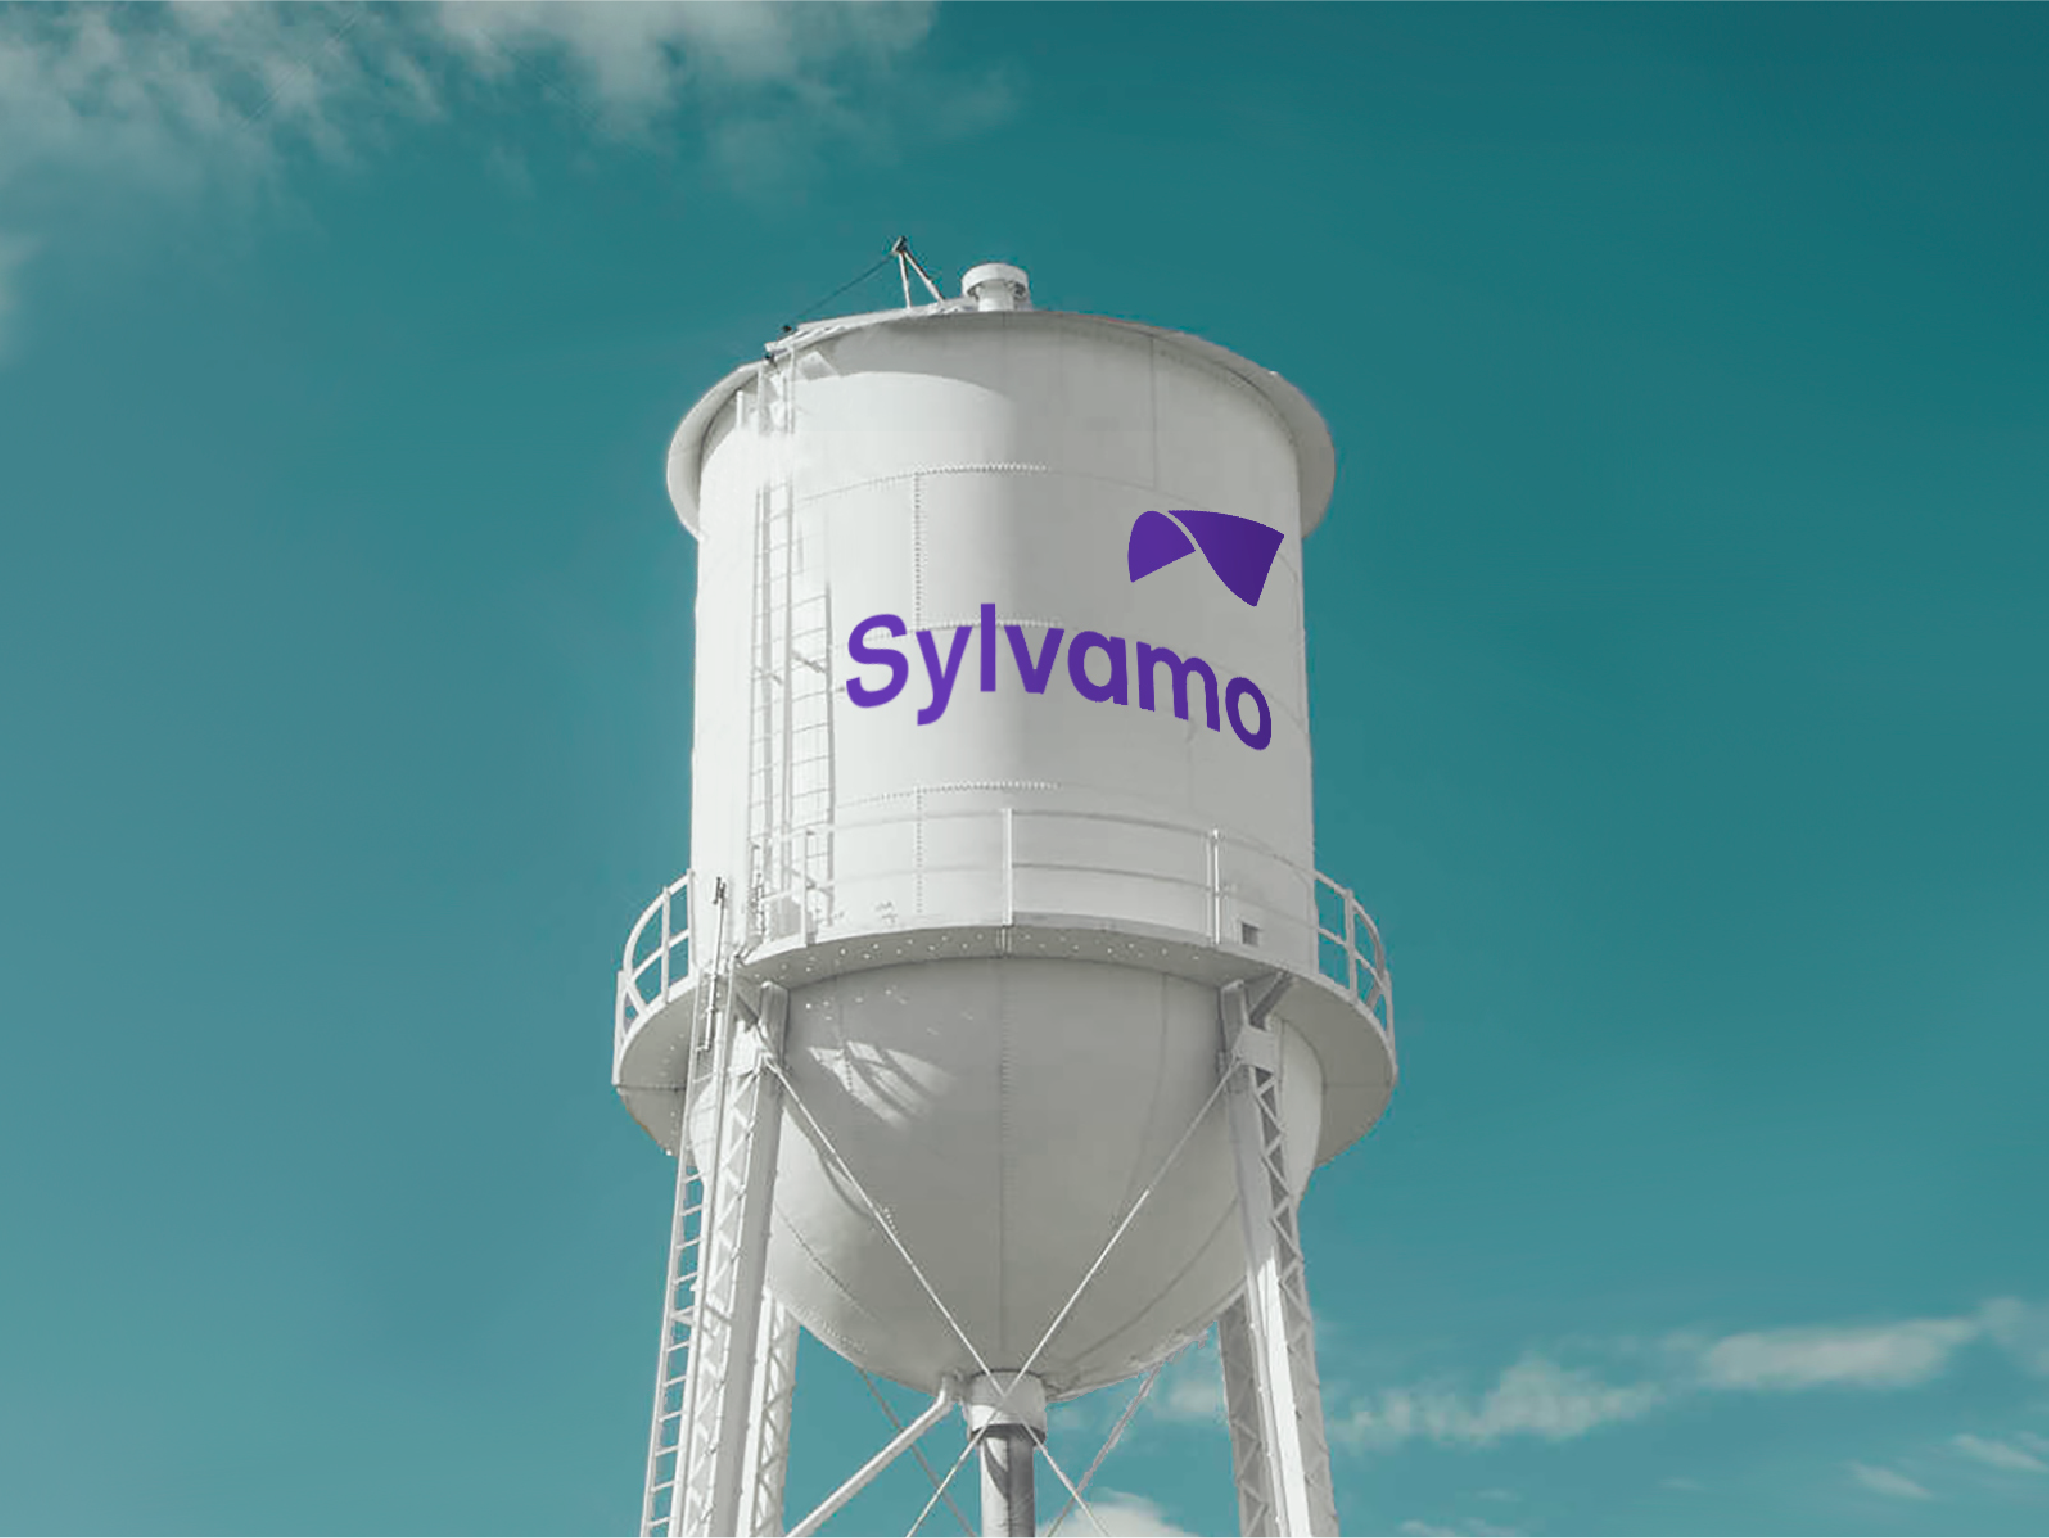 Sylvamo water tower